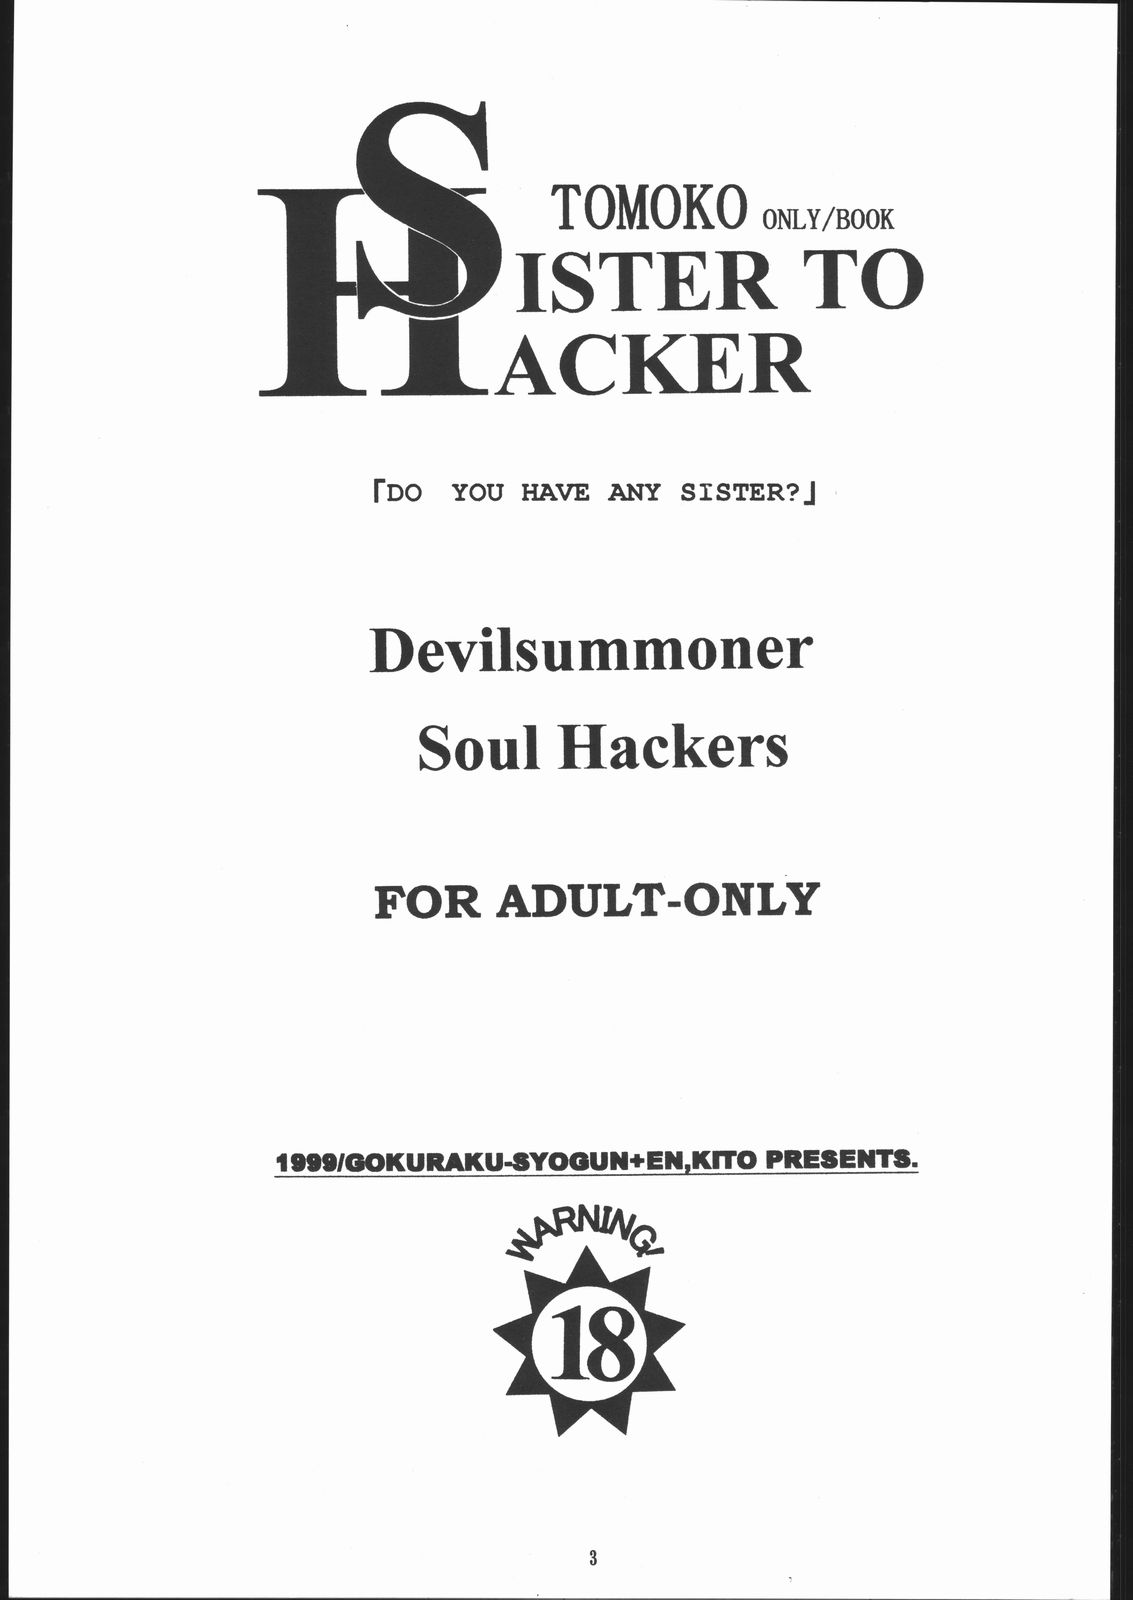 [Toko-ya] SISTER to HACKER (Devilsummoner Soul Hackers) 